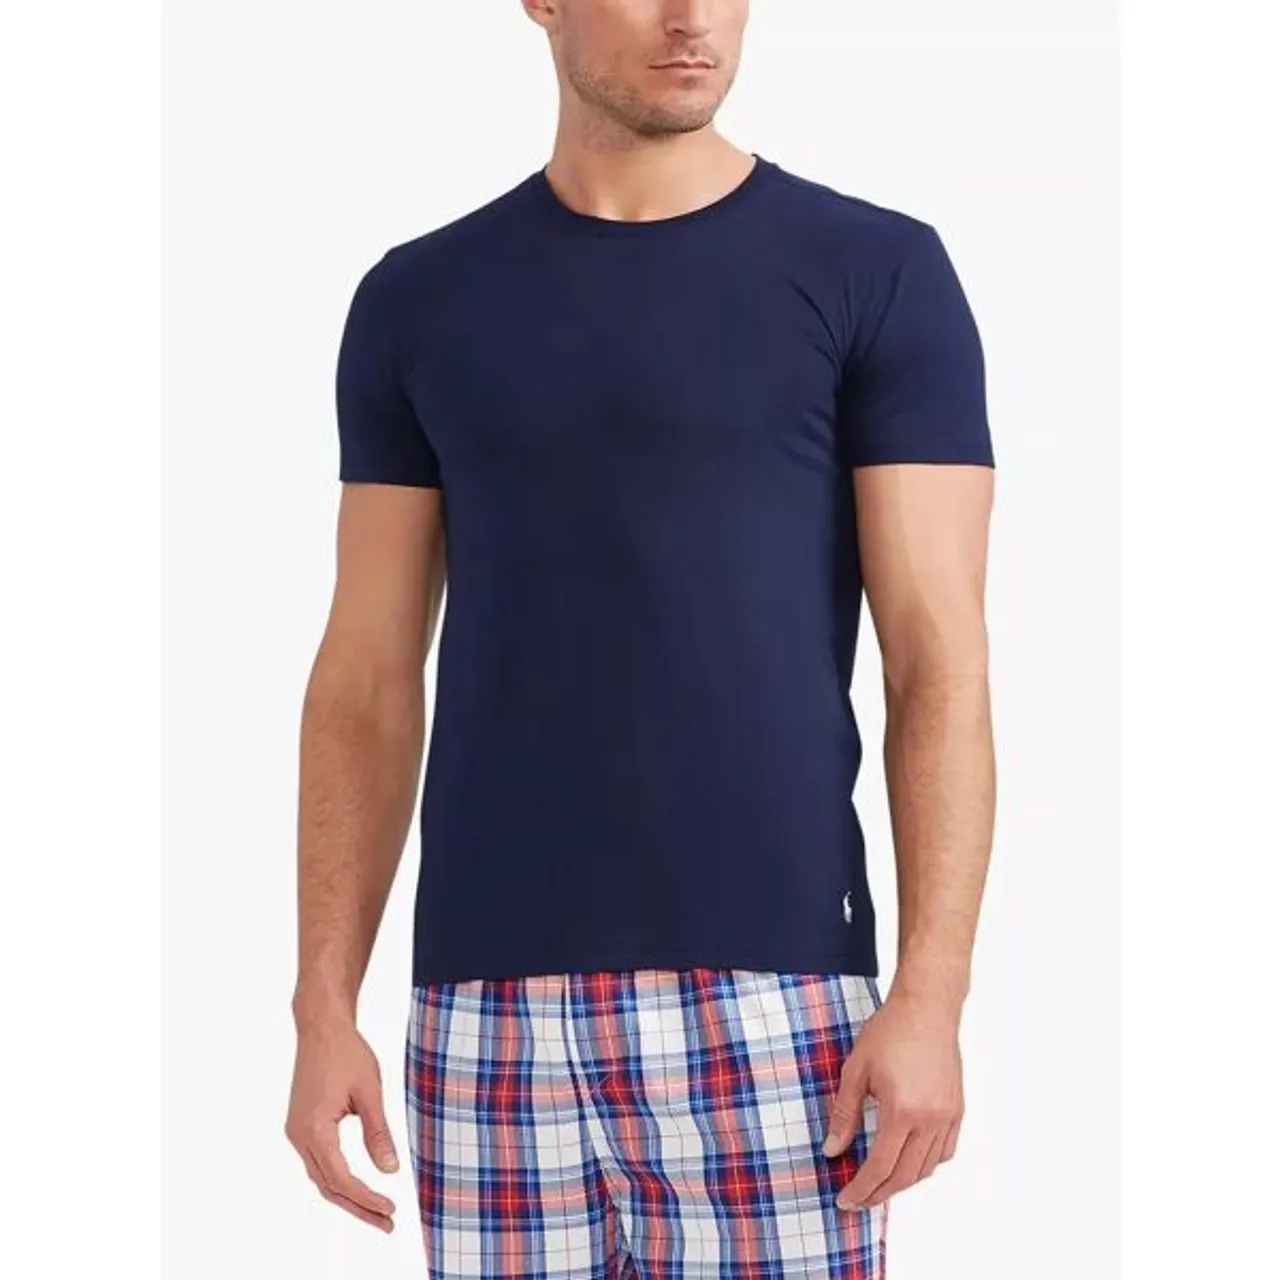 Polo Ralph Lauren Cotton Slim Fit Crew Neck Lounge T-Shirt, Pack of 3 - Multi - Male